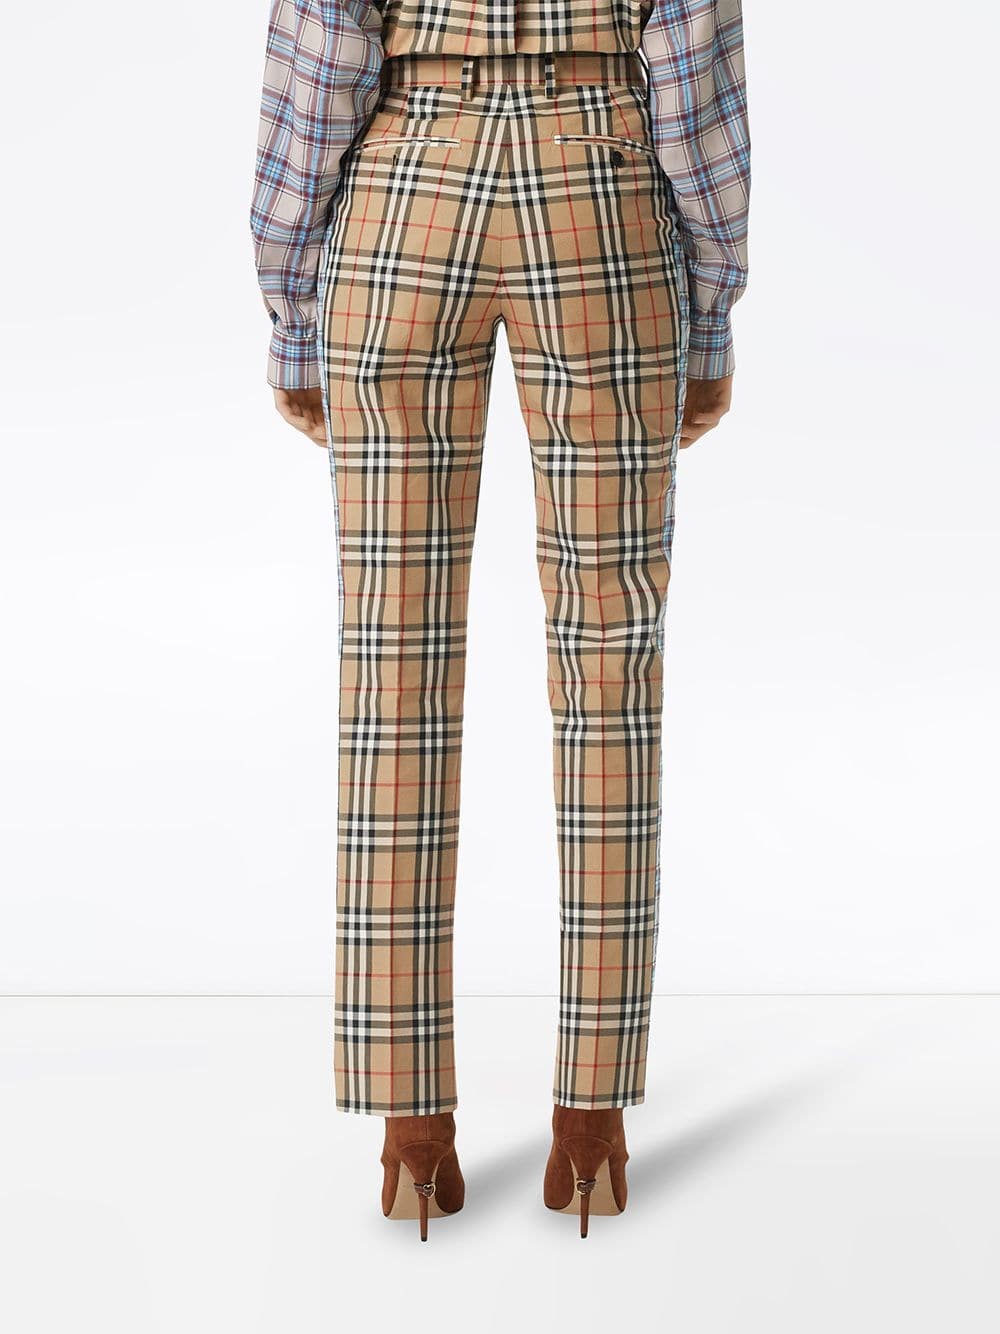 burberry look alike trousers